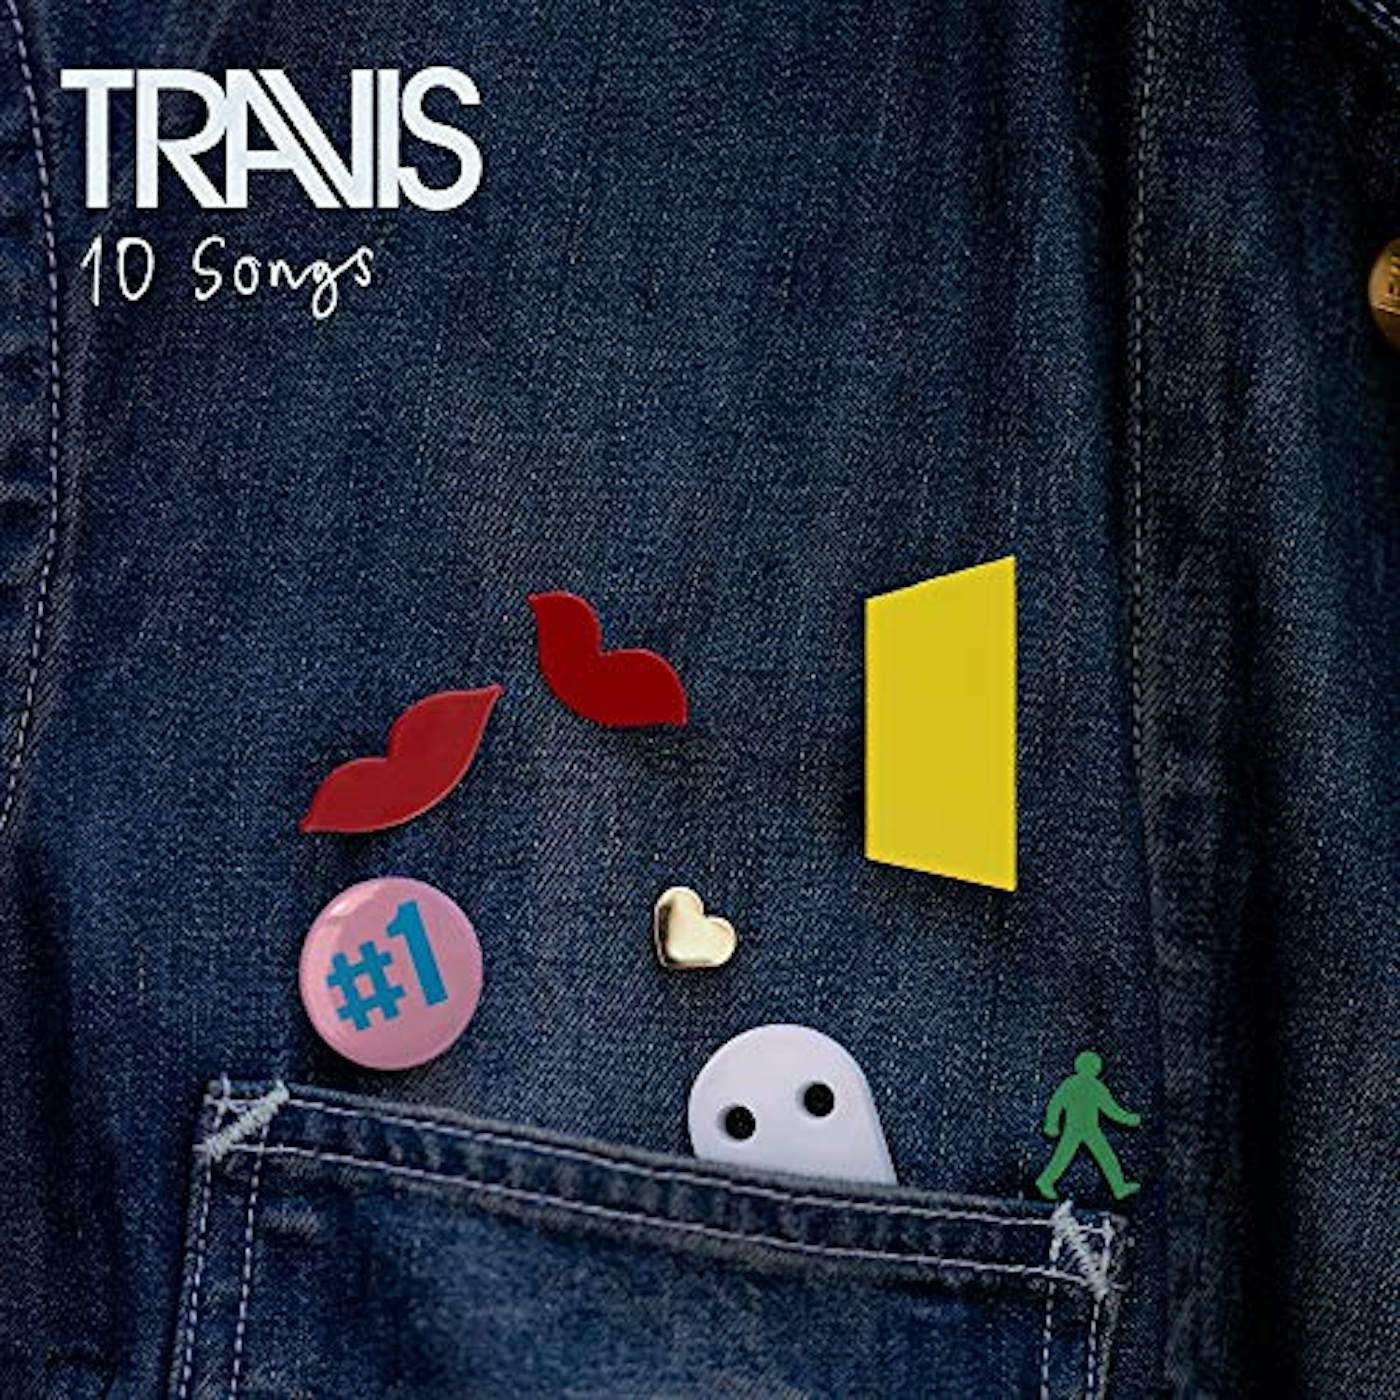 Travis 10 Songs Vinyl Record